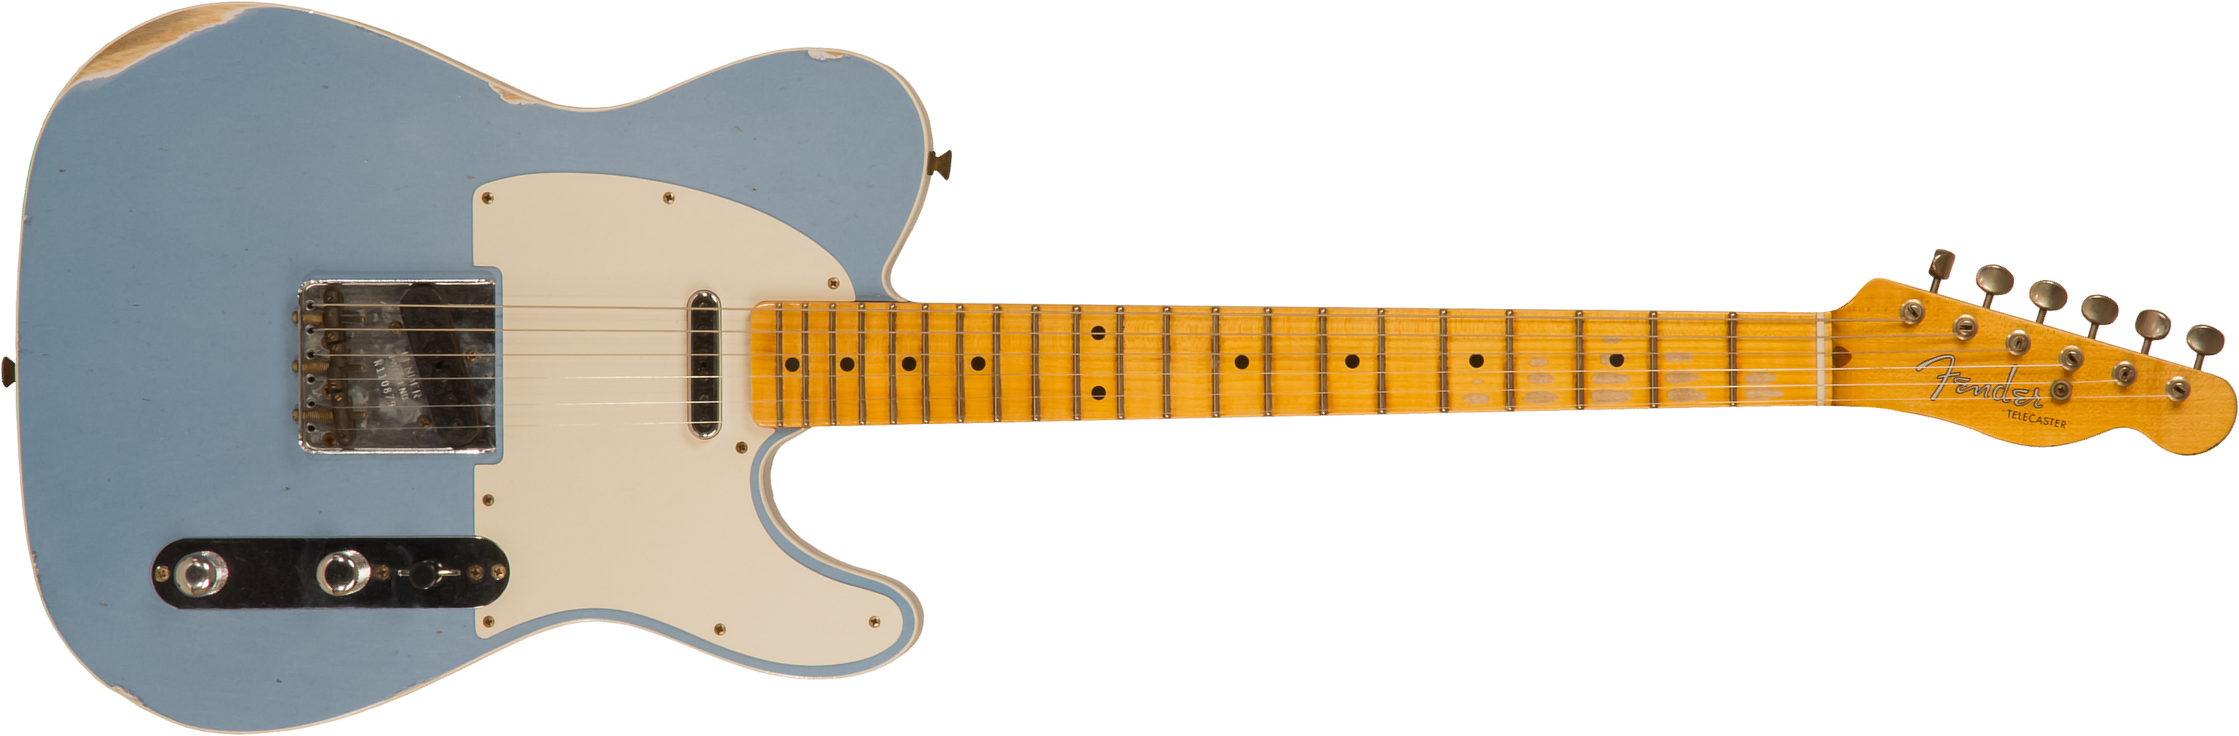 Fender Custom Shop Tele Custom Tomatillo 2s Ht Mn #r110879 - Relic Lake Placid Blue - Televorm elektrische gitaar - Main picture